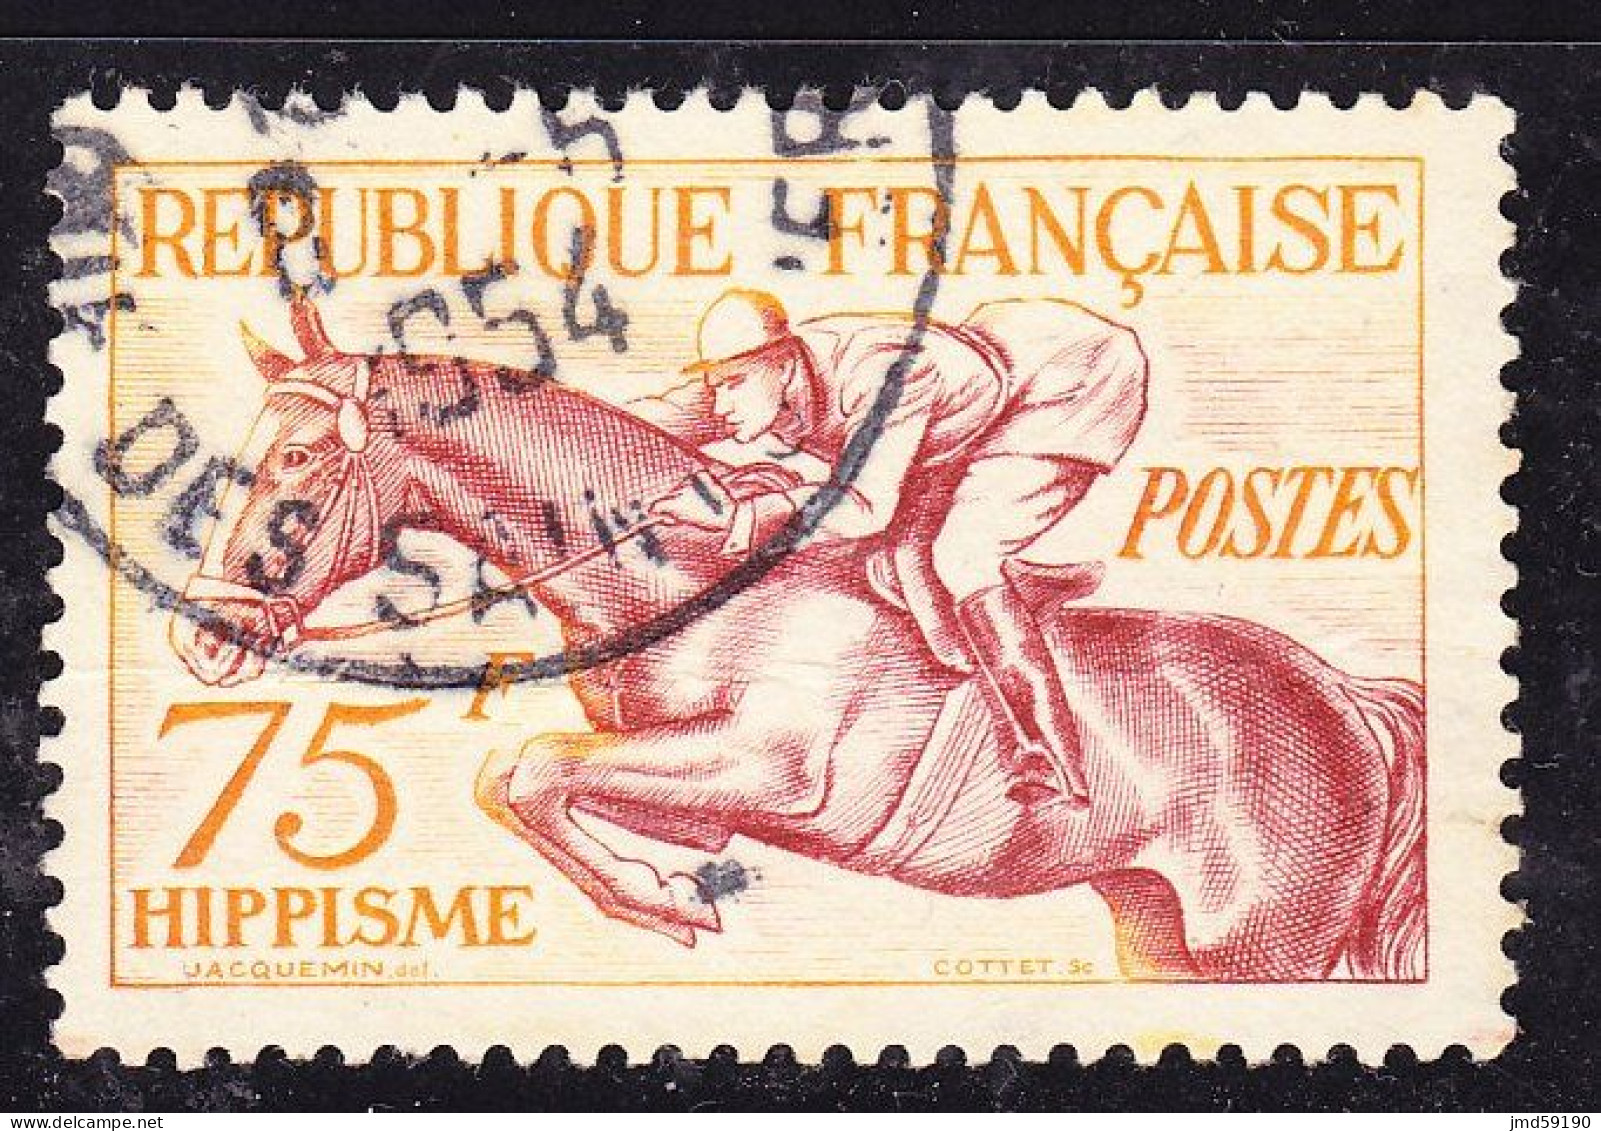 FRANCE Timbre Oblitéré N° 965 - Jeux Olympiques D'HELSINKI 1952 - 75Fr Hippisme - Gebraucht